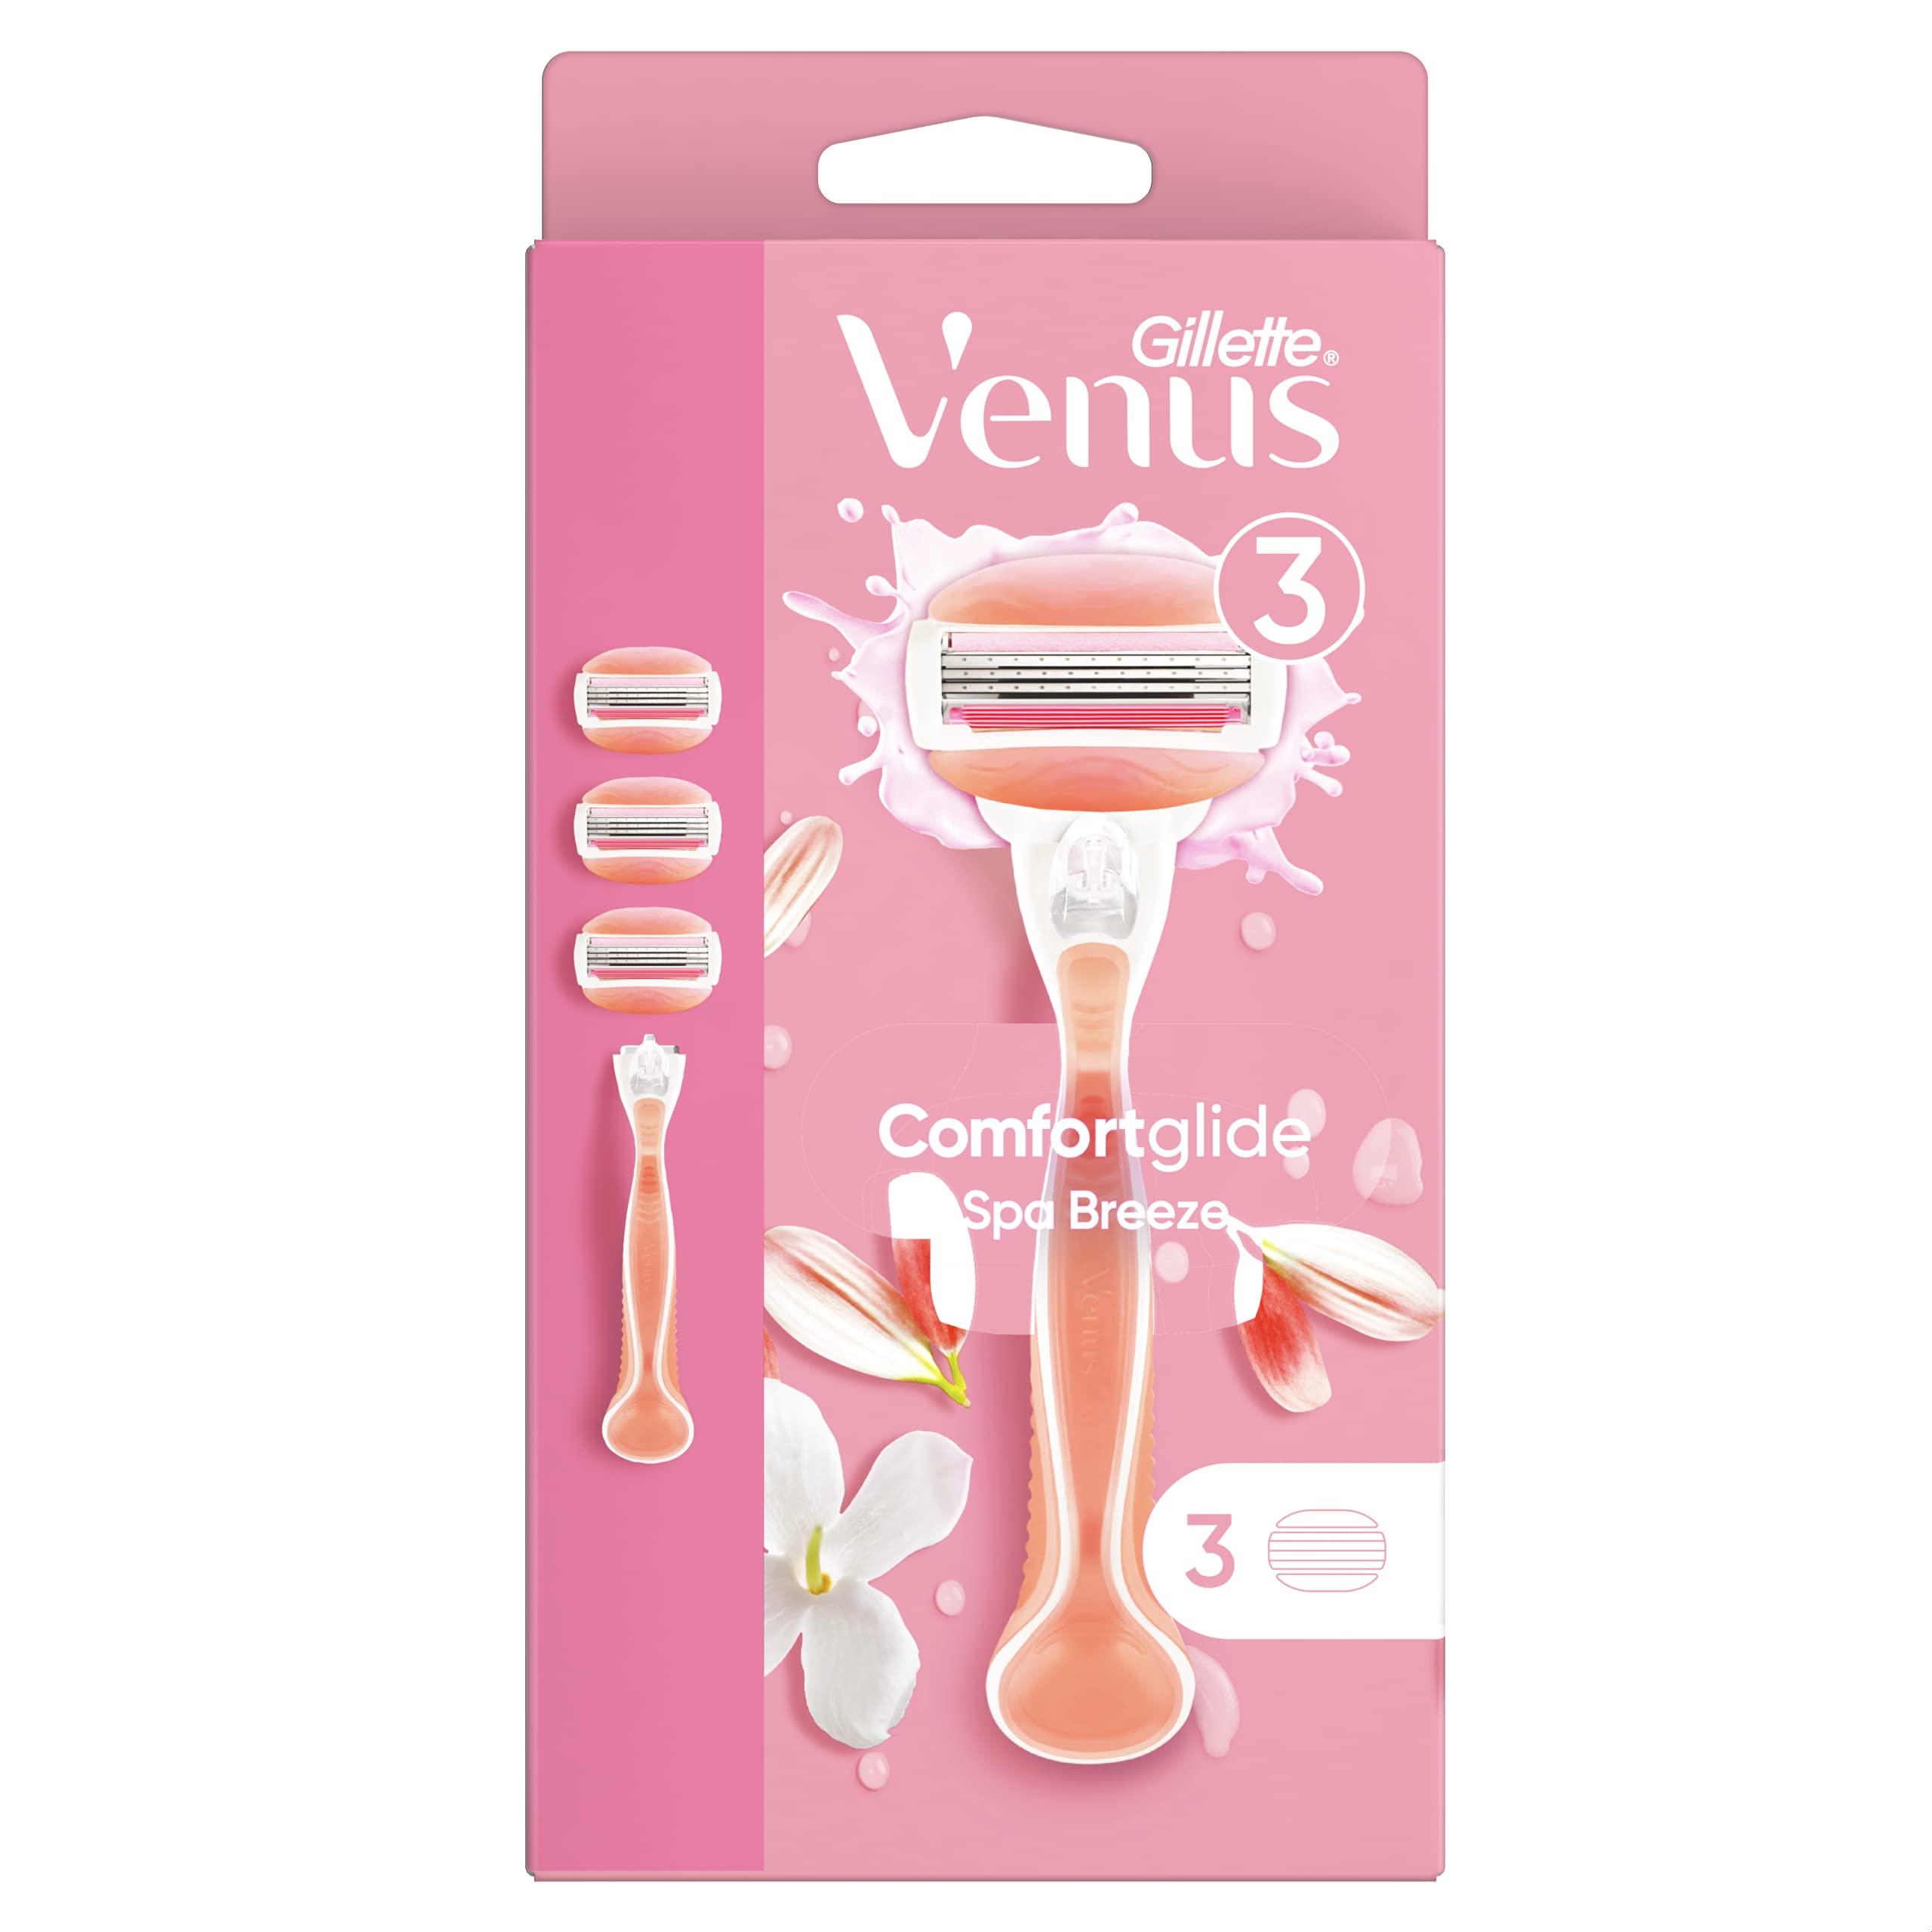 gillette Venus comfortglide Spa Breeze Womens Razor +, 3 2-in-1 Razor Blade Refills, with Shaving gel Bars (Packaging May Vary)